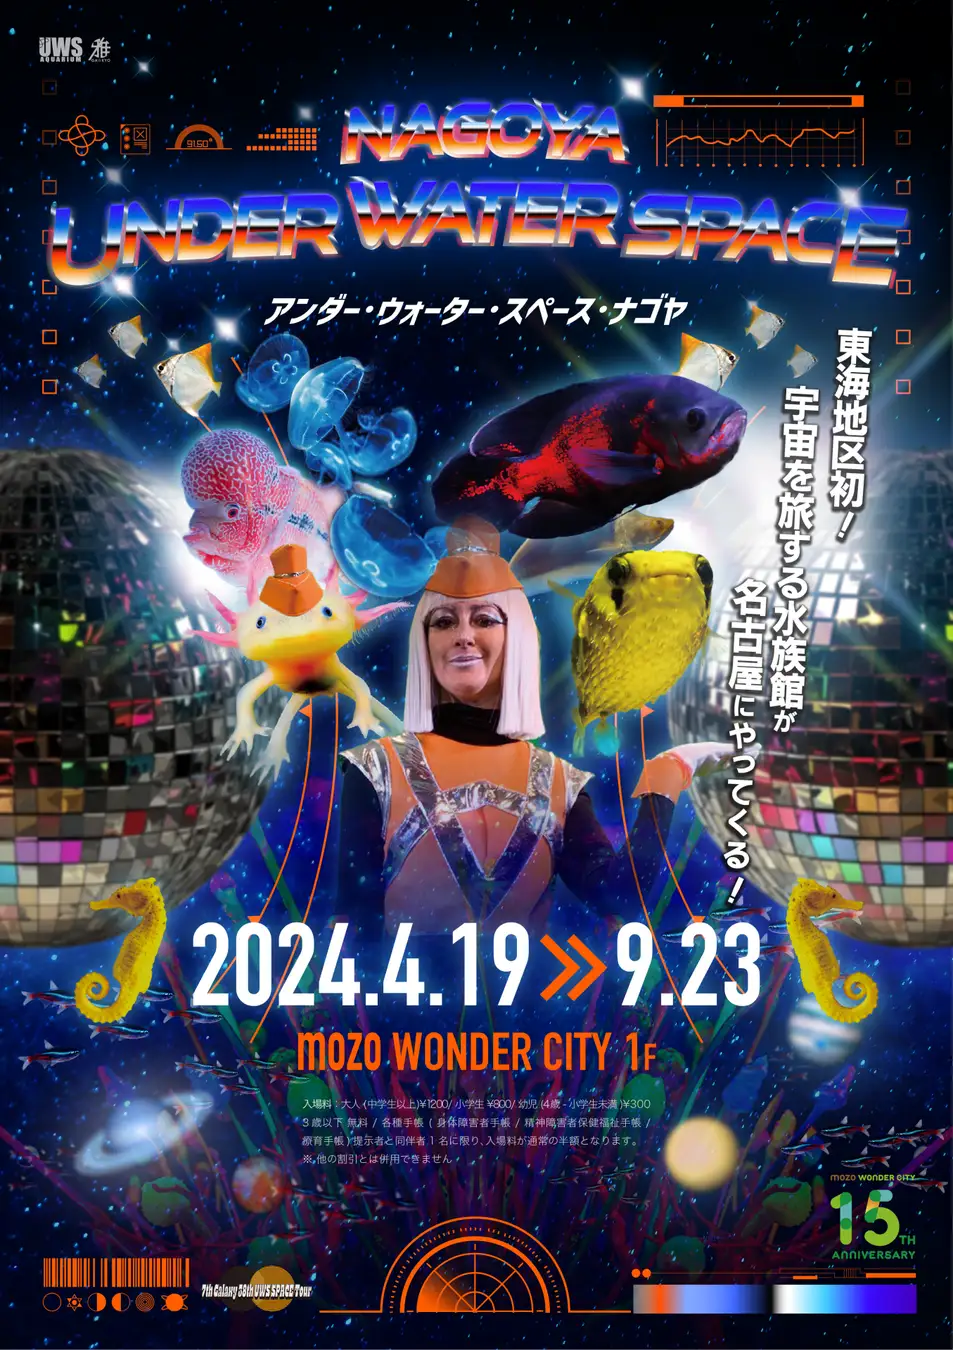 UNDER WATER SPACE NAGOYA 宇宙を旅する新感覚アクアリウムがmozoワンダーシティ (愛知県) にて 4 月 19日 より開幕！